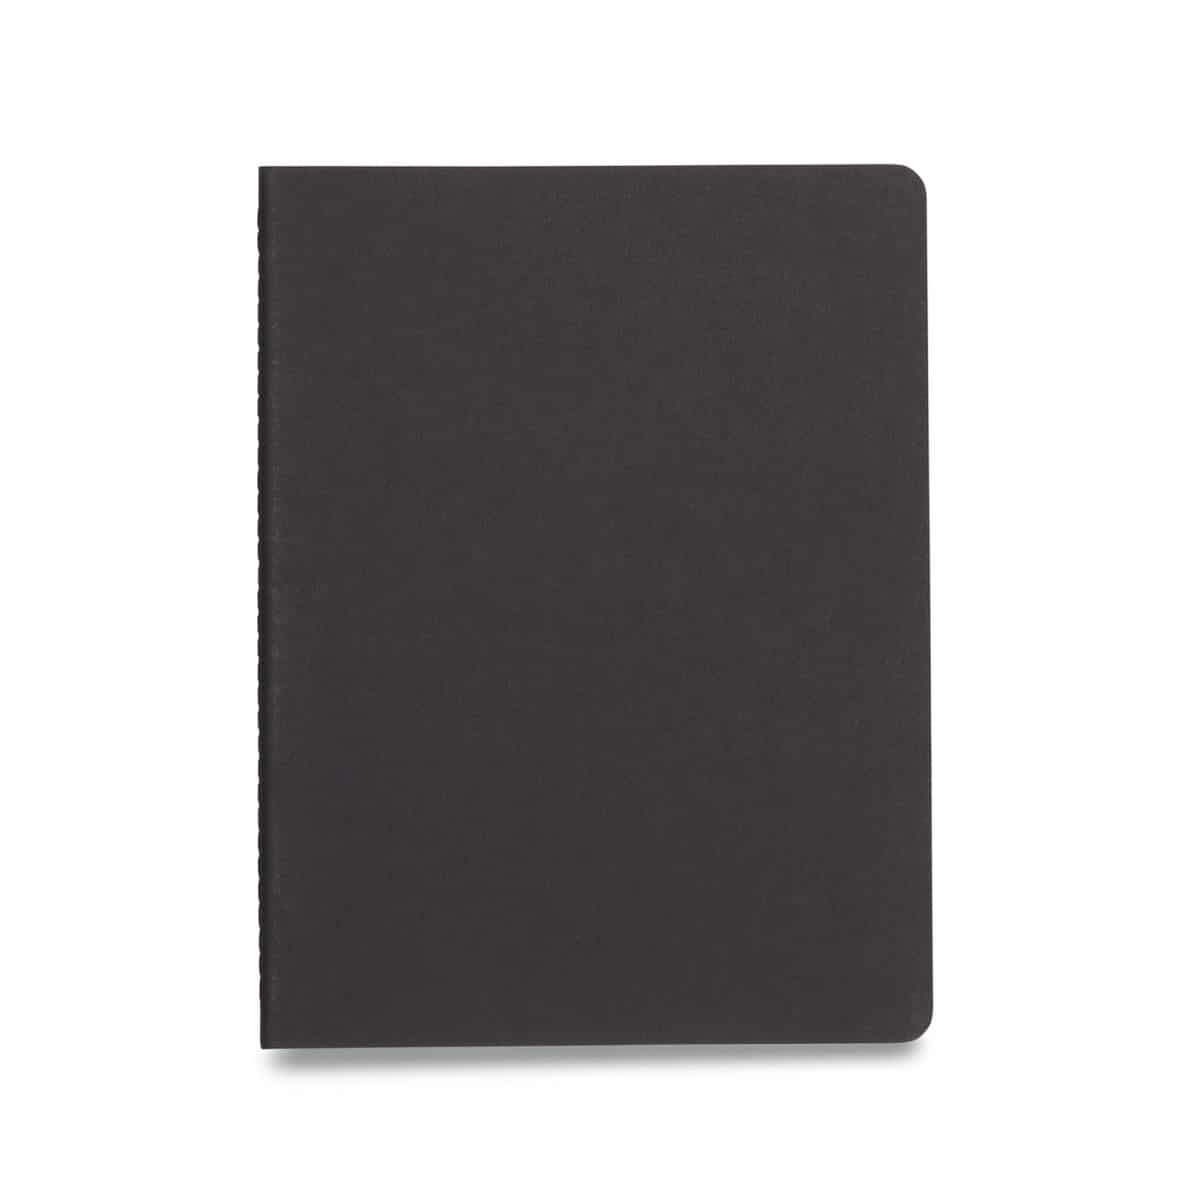 Moleskine Cahier: Black Journal Extra Large, Set of 3